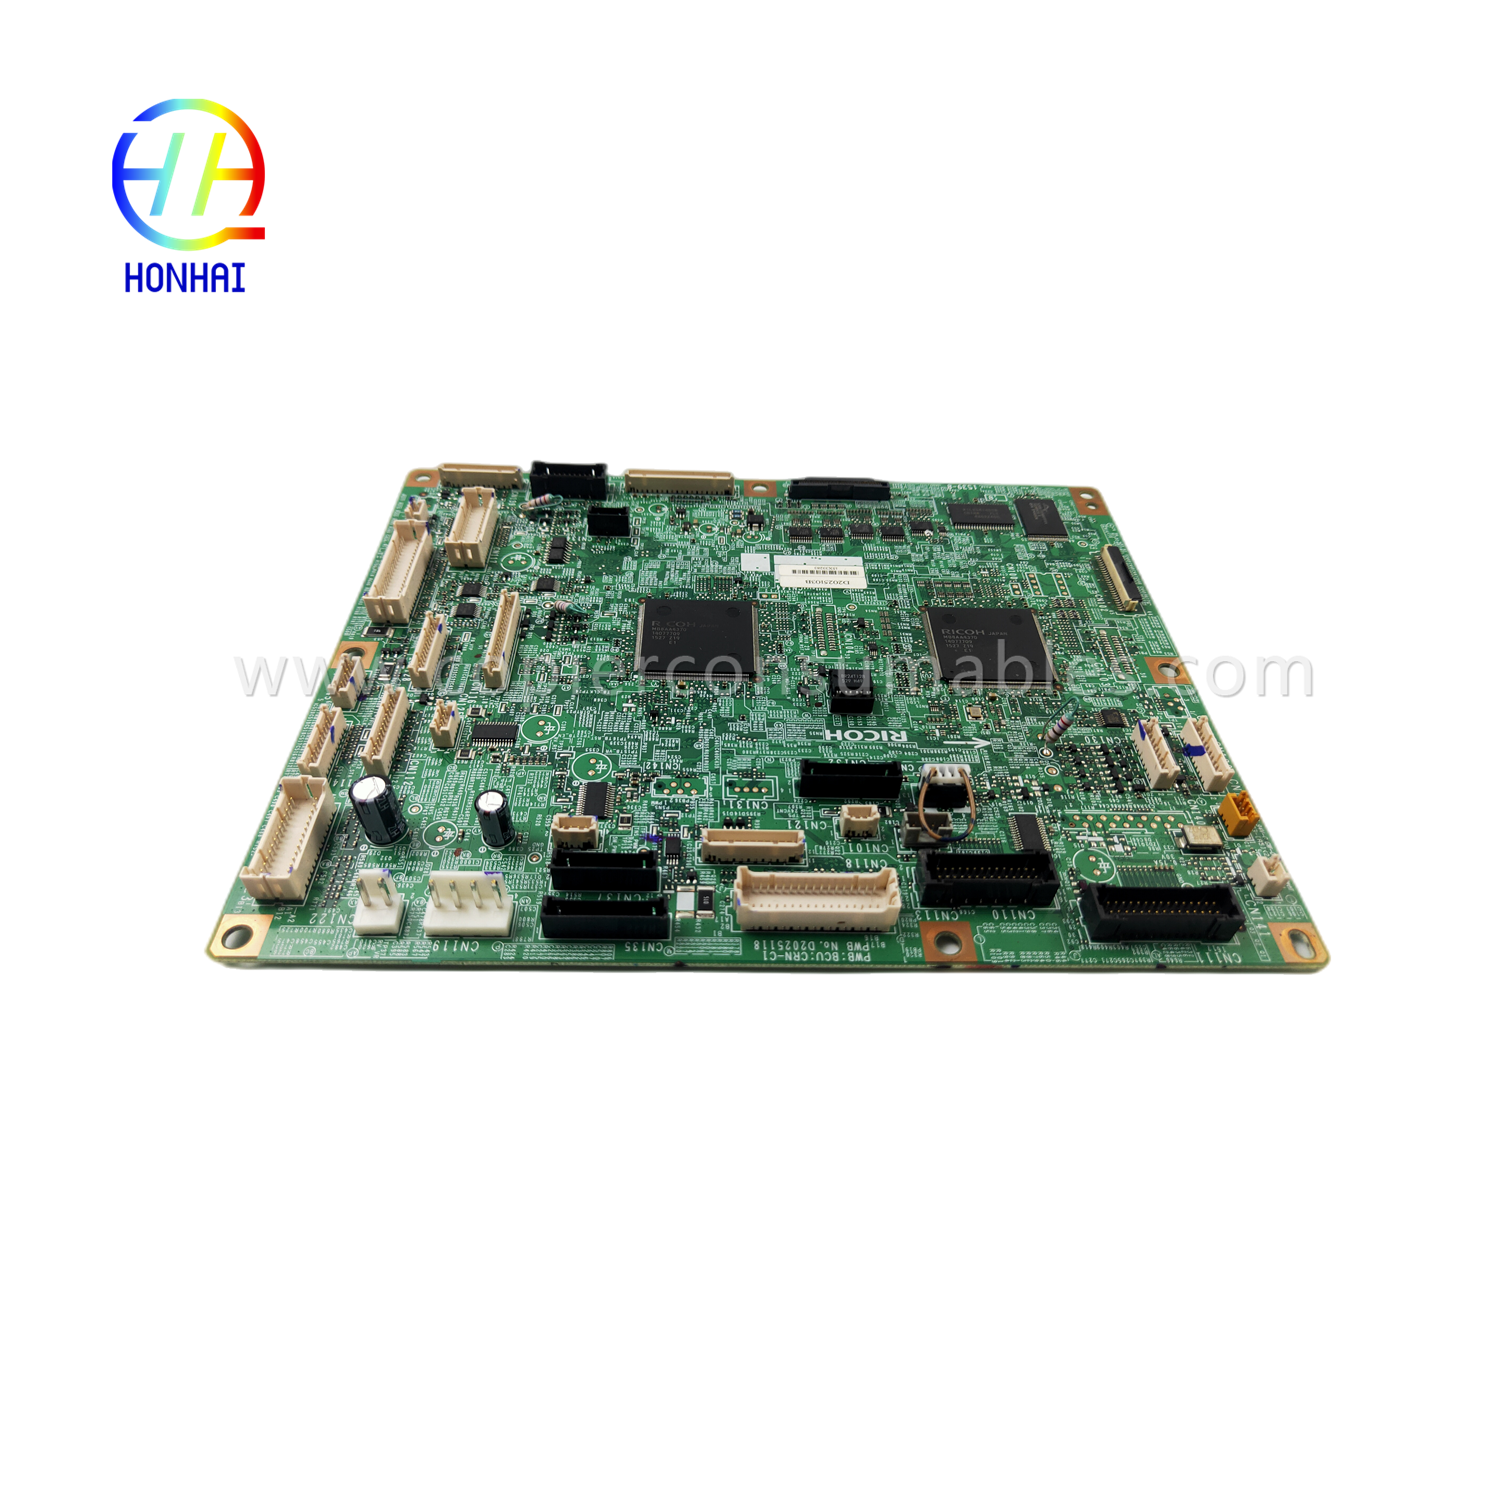 https://c585.goodo.net/bicu-board-for-ricoh-3045-3035-lanier-ld235-ld245-savin-4035-4045-bicu-board-assembly-product/